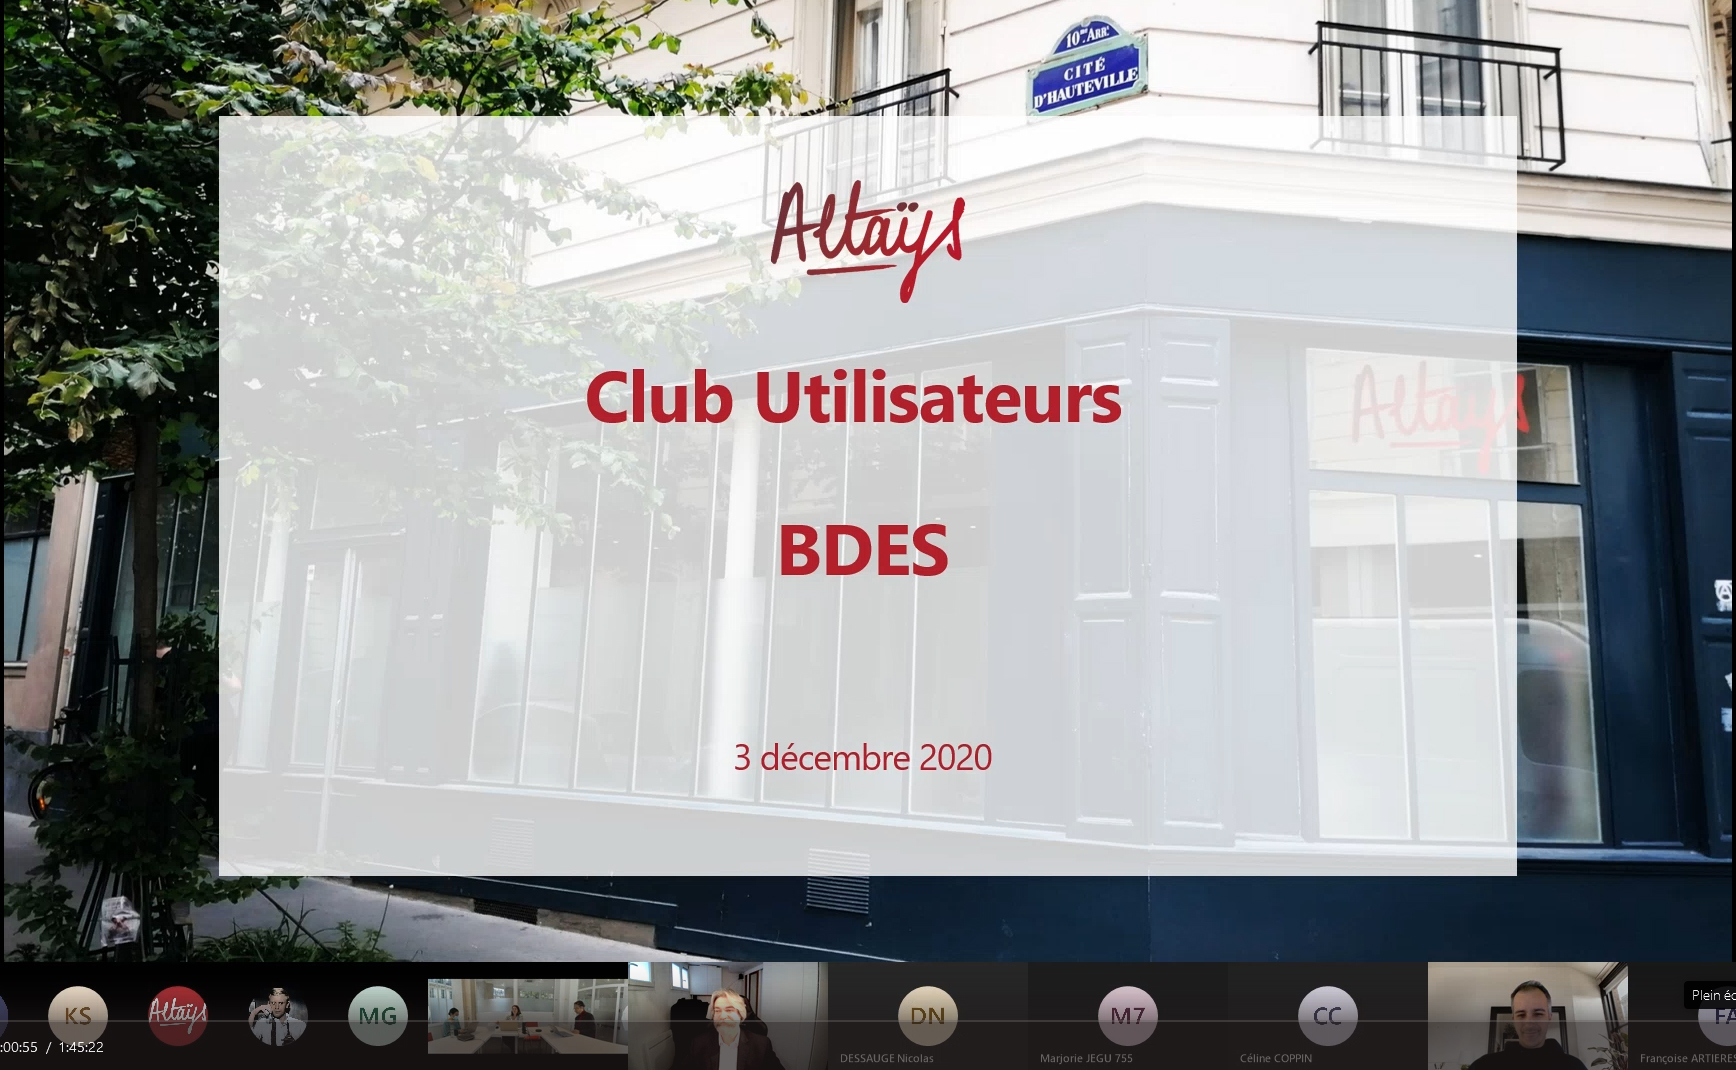 Altays Club jutilisateurs BDES